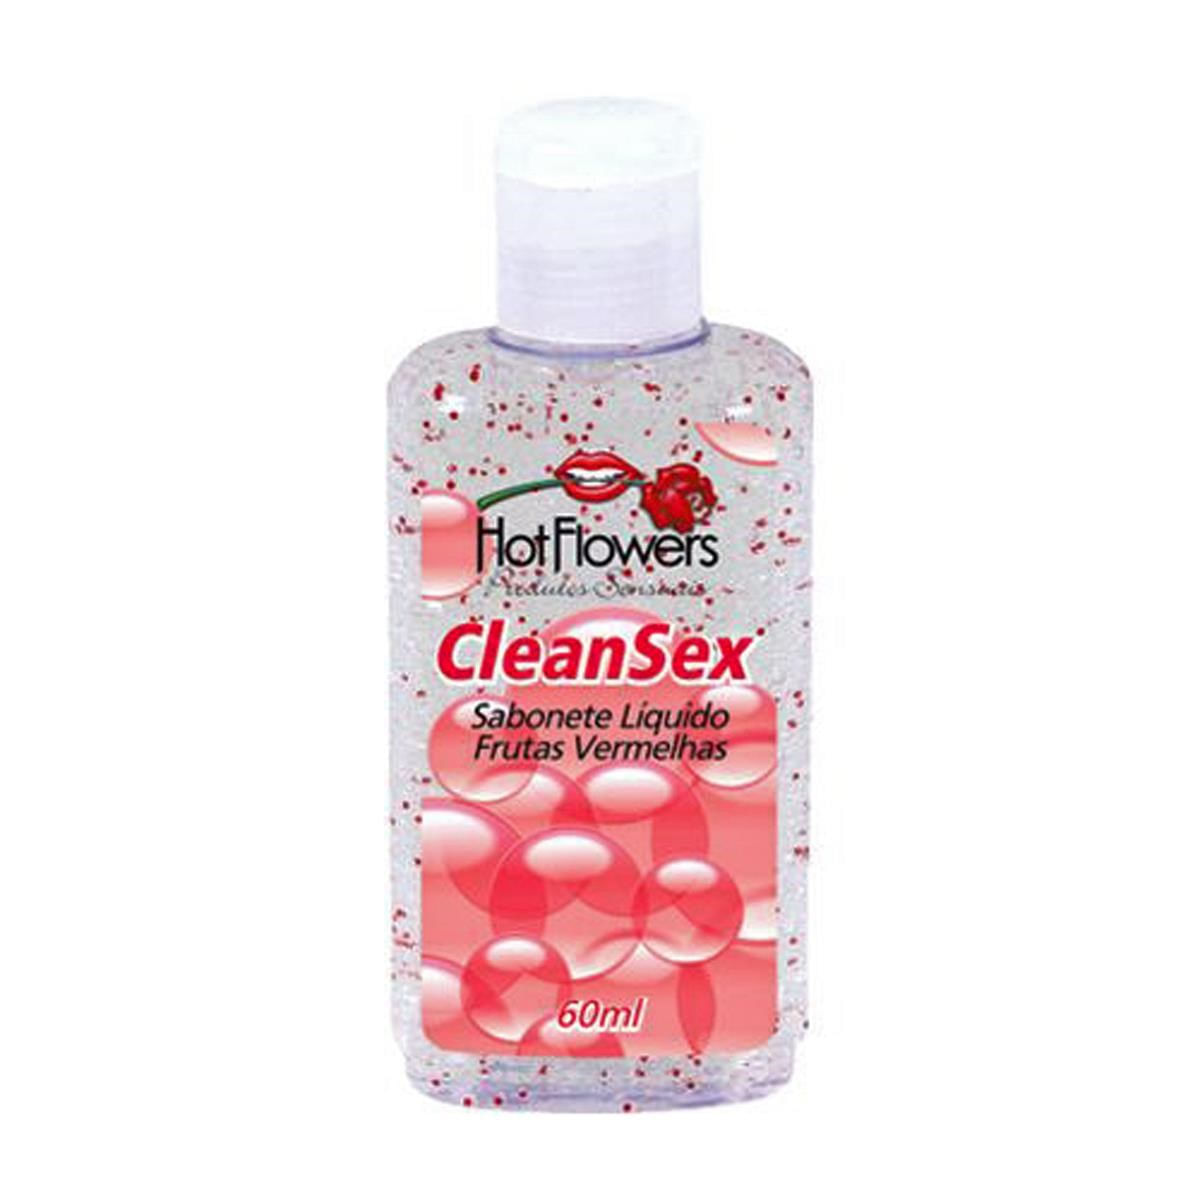 CleanSex Sabonete LÍquido Frutas Vermelhas 60ml Hot Flowers - Miess